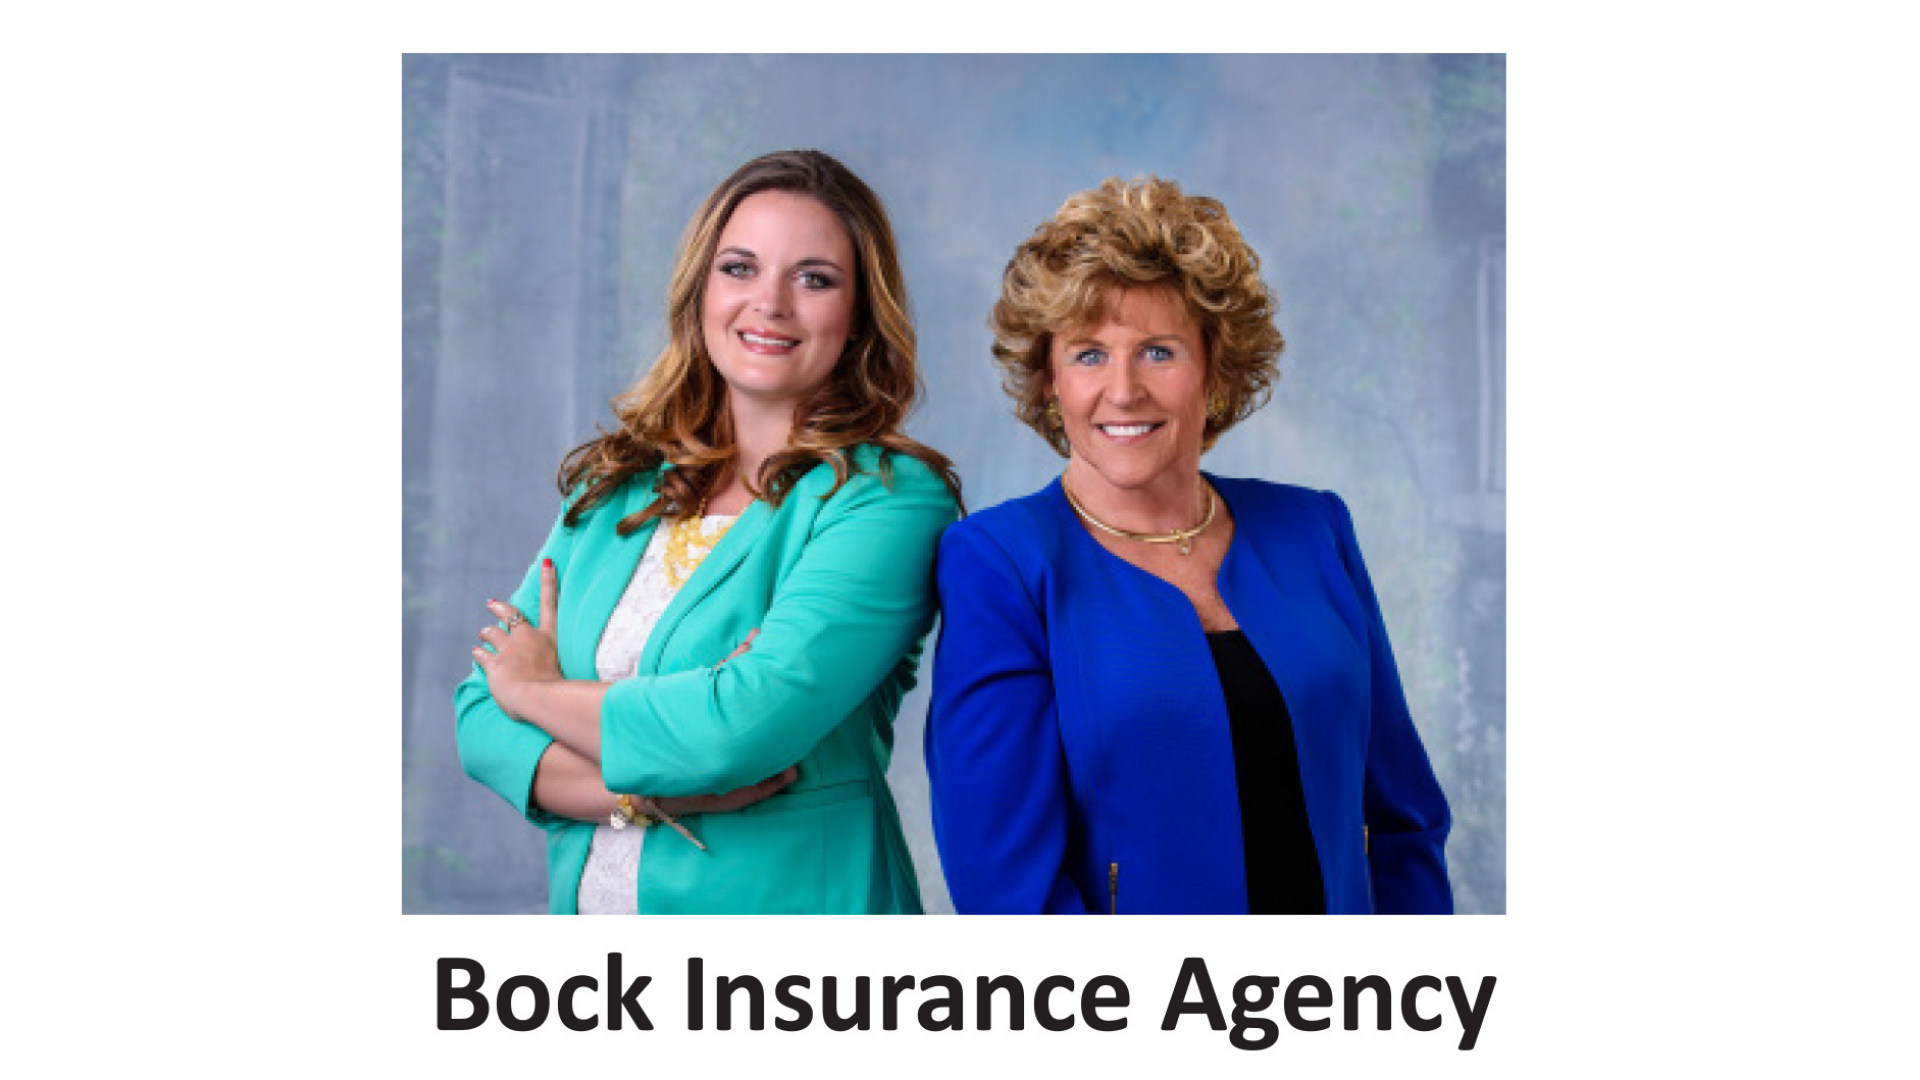 Bock Insurance Agency